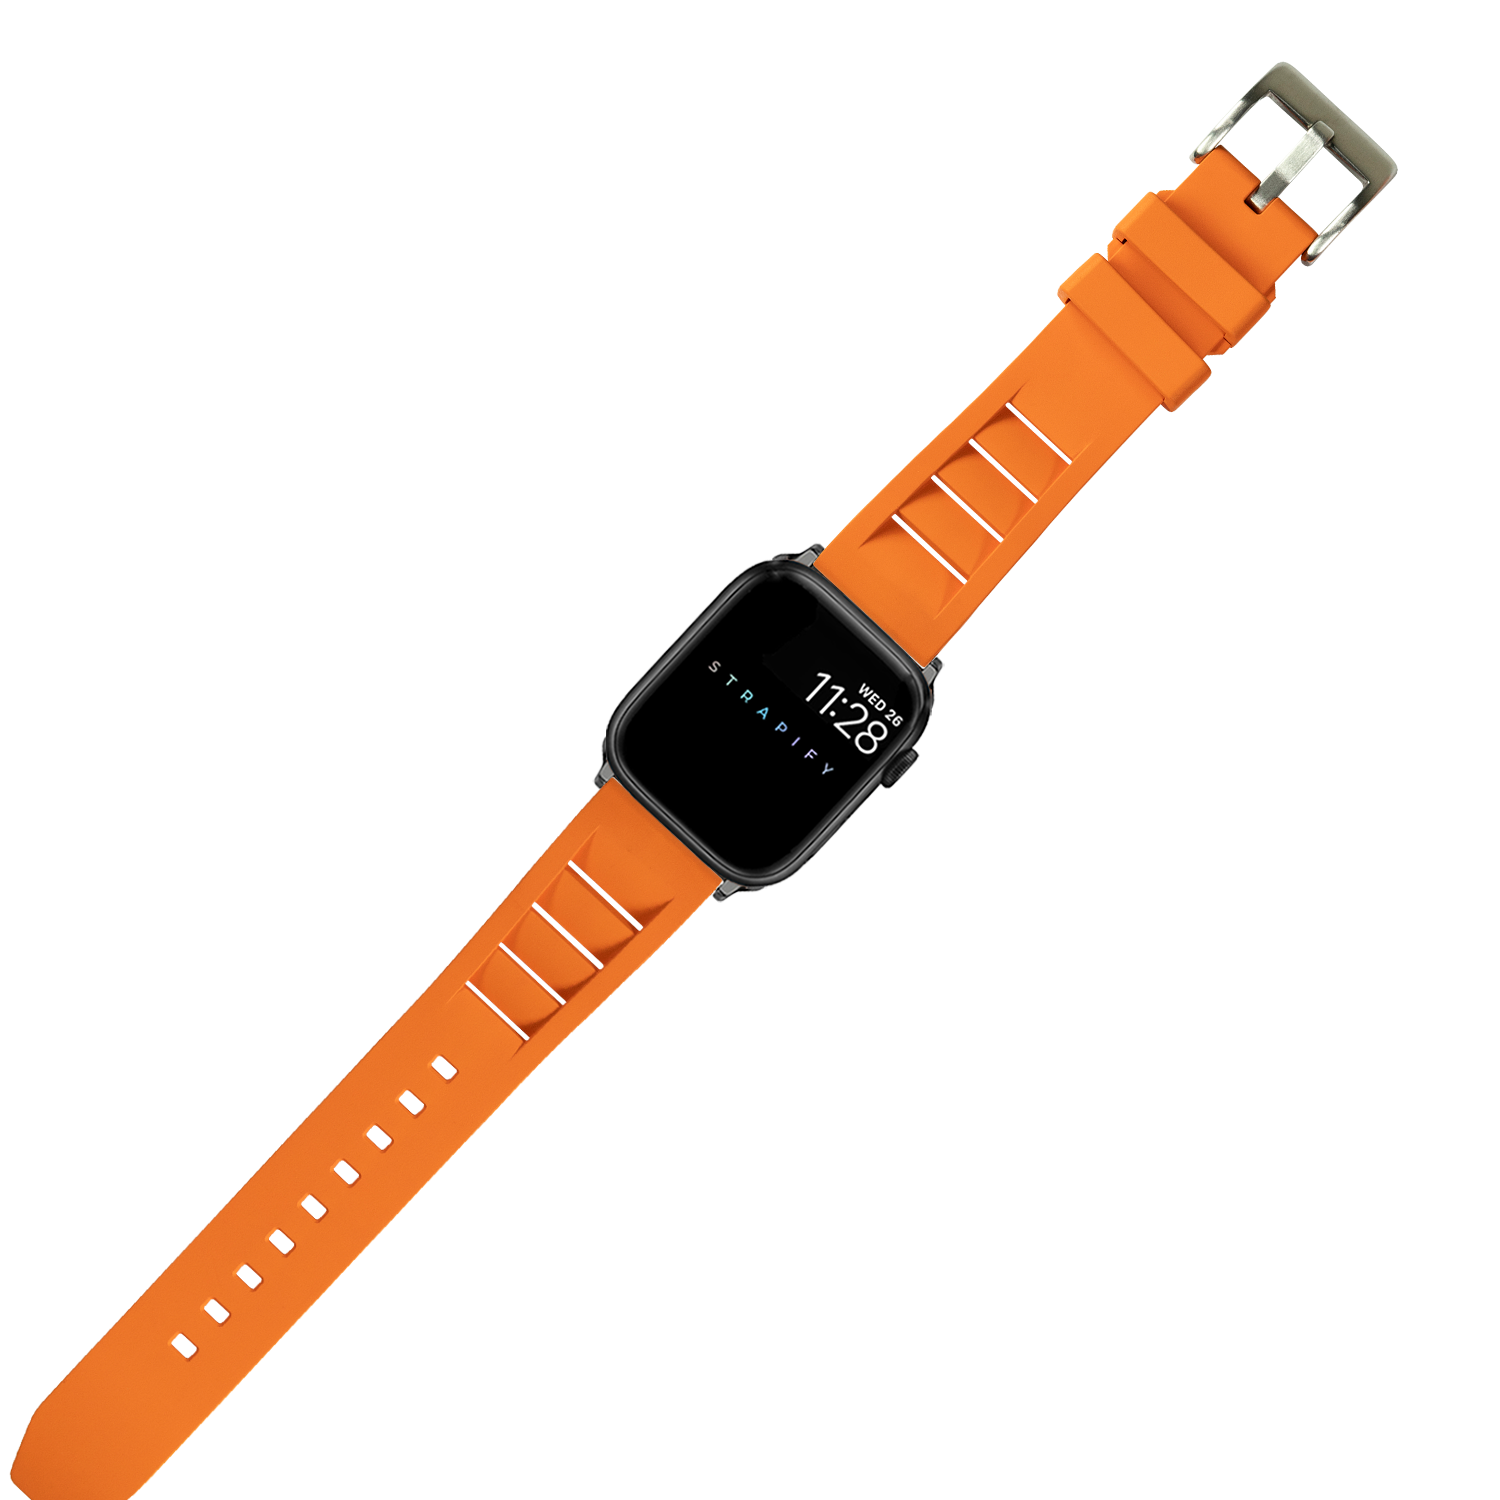 [Apple Watch] Shark Fin FKM Rubber - Orange